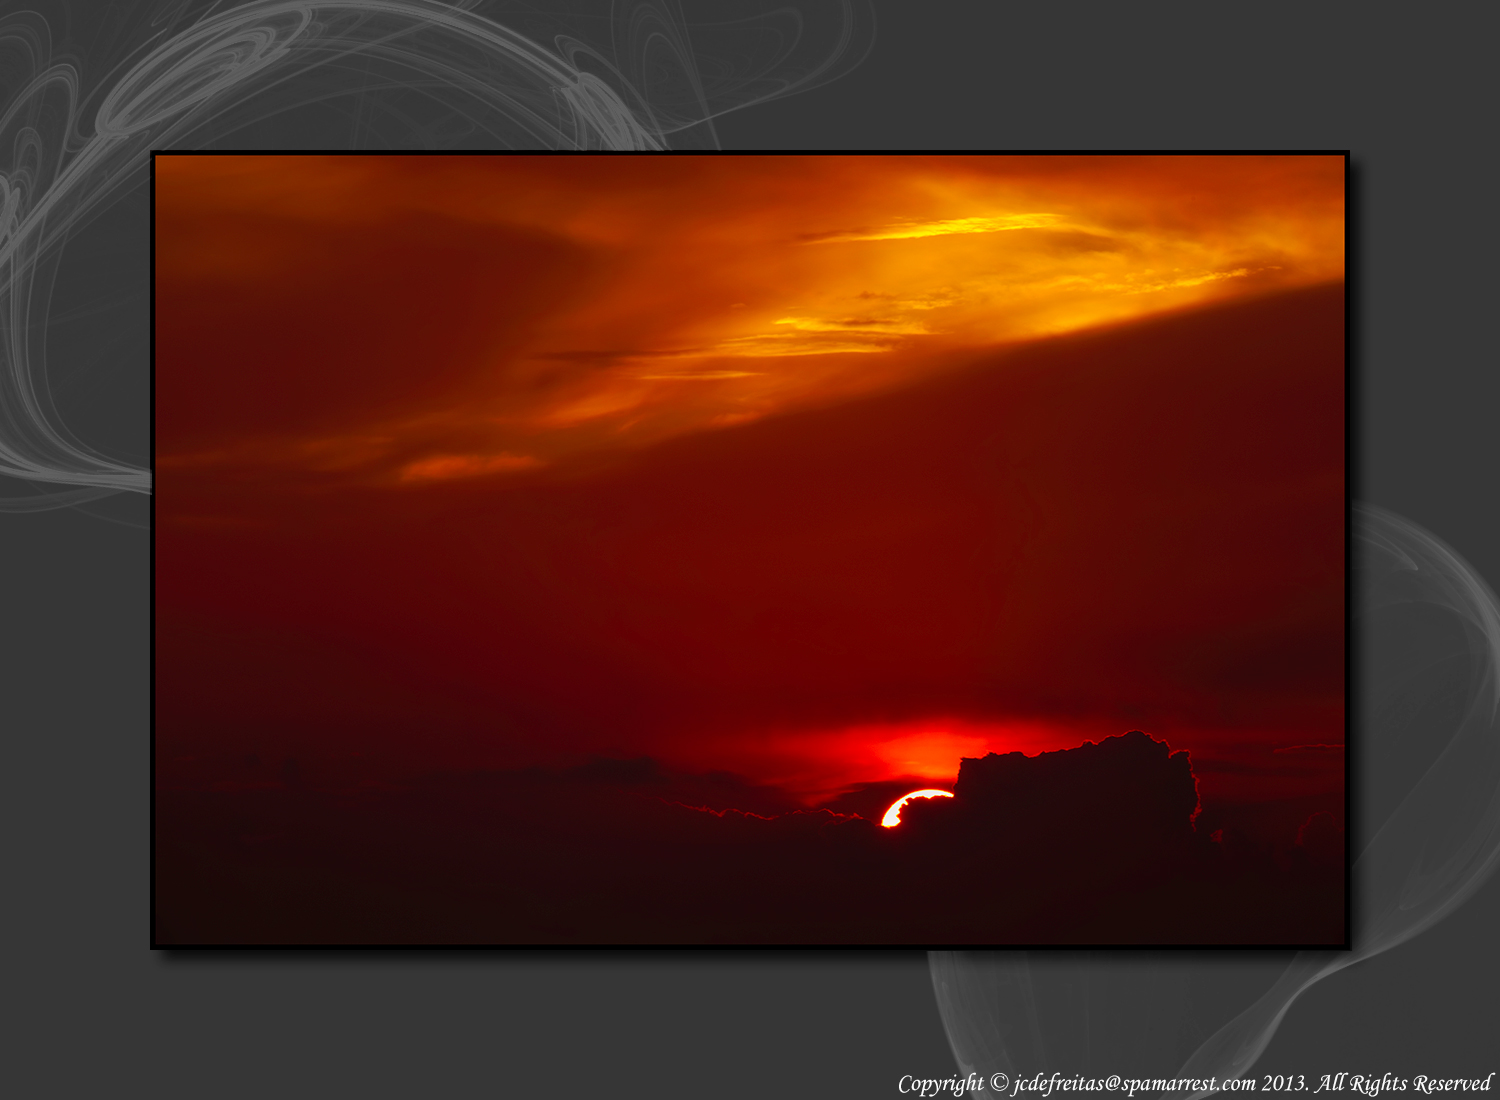 2012 - Sunset in Albufeira, Algarve - Portugal